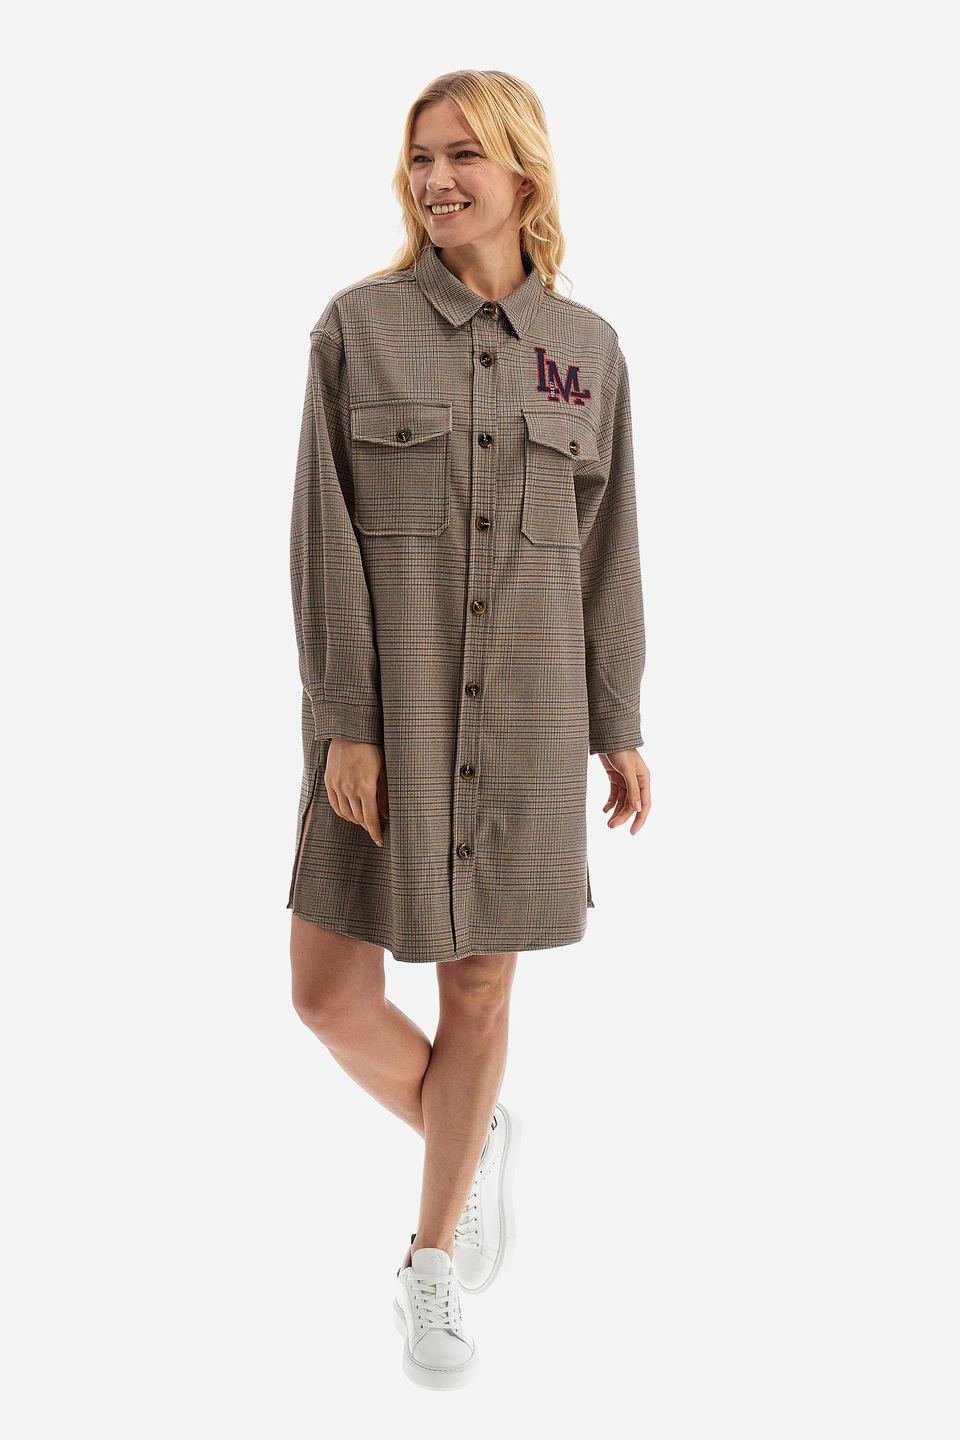 Women's jacket in an oversized fit - Wanette | La Martina - Official Online Shop